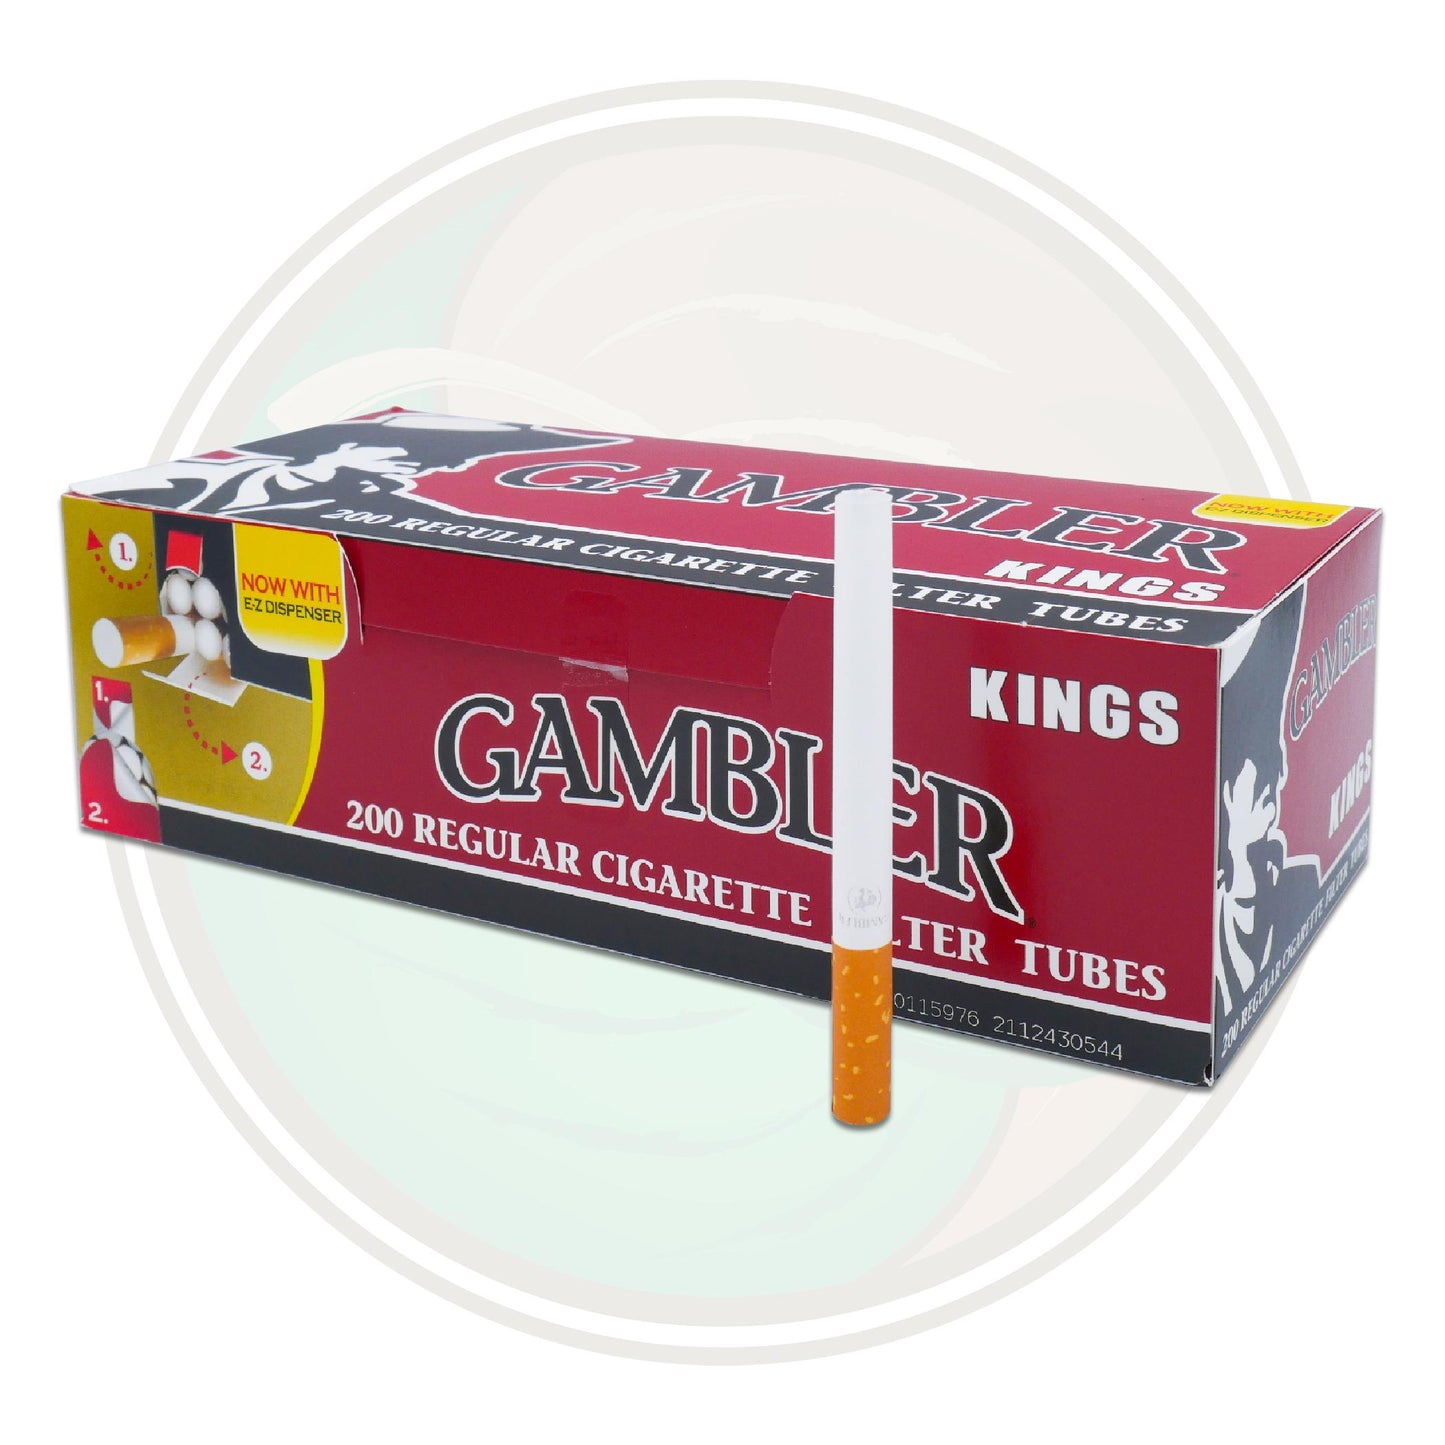 Gambler Red - Kings - Cigarette Tubes